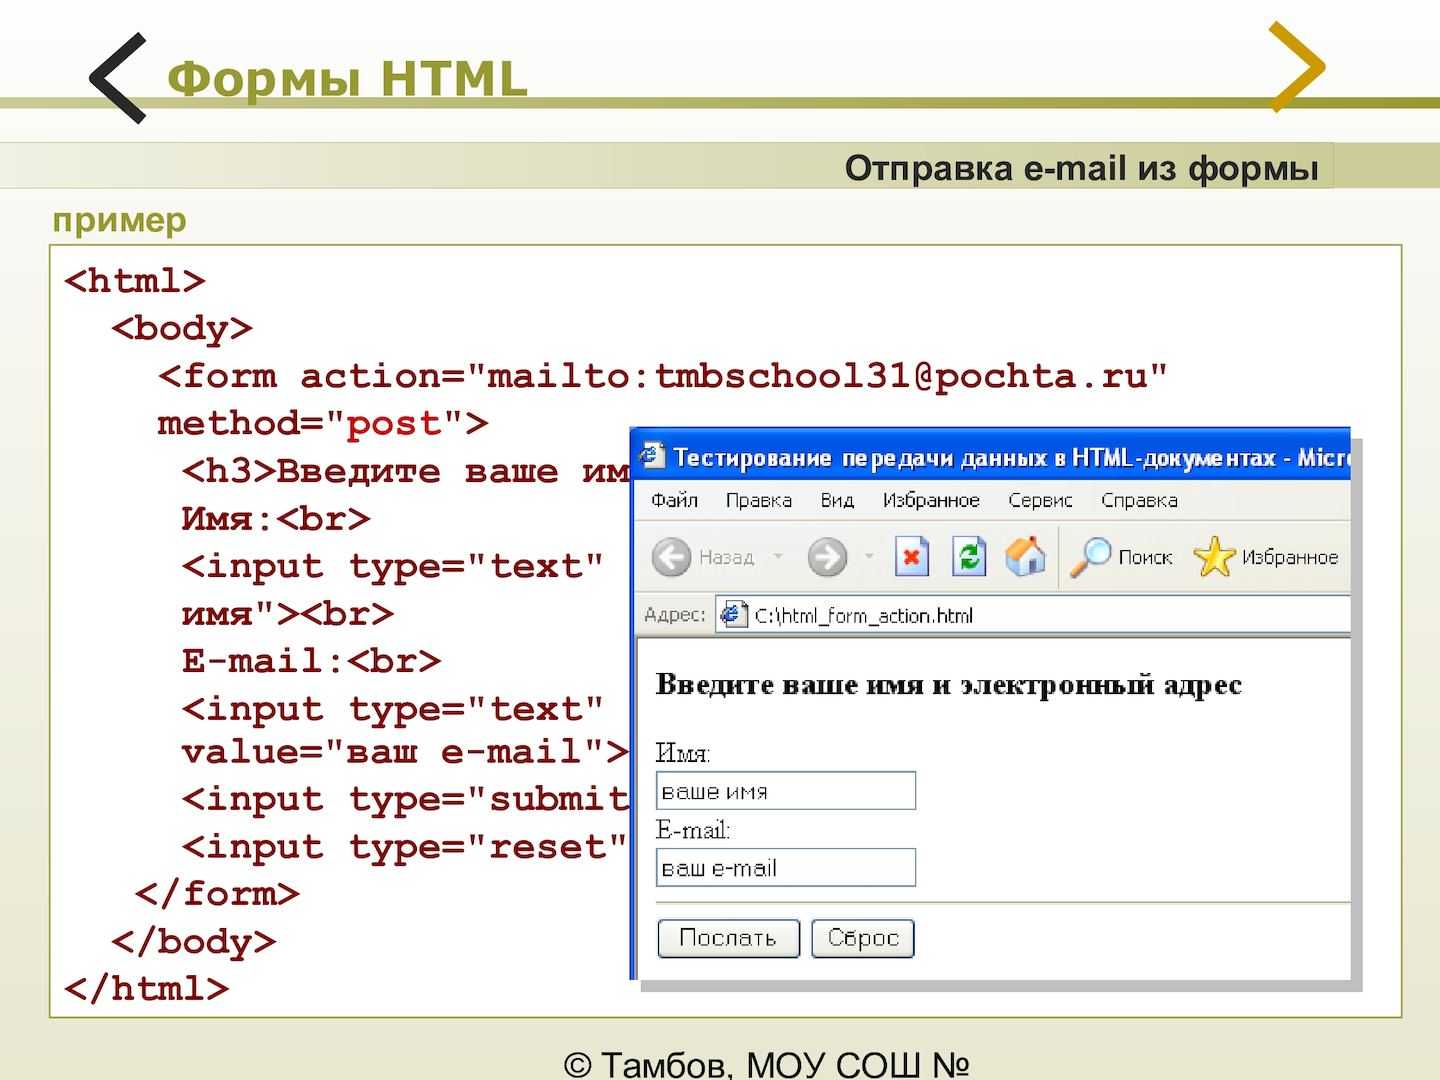 Тег input в html